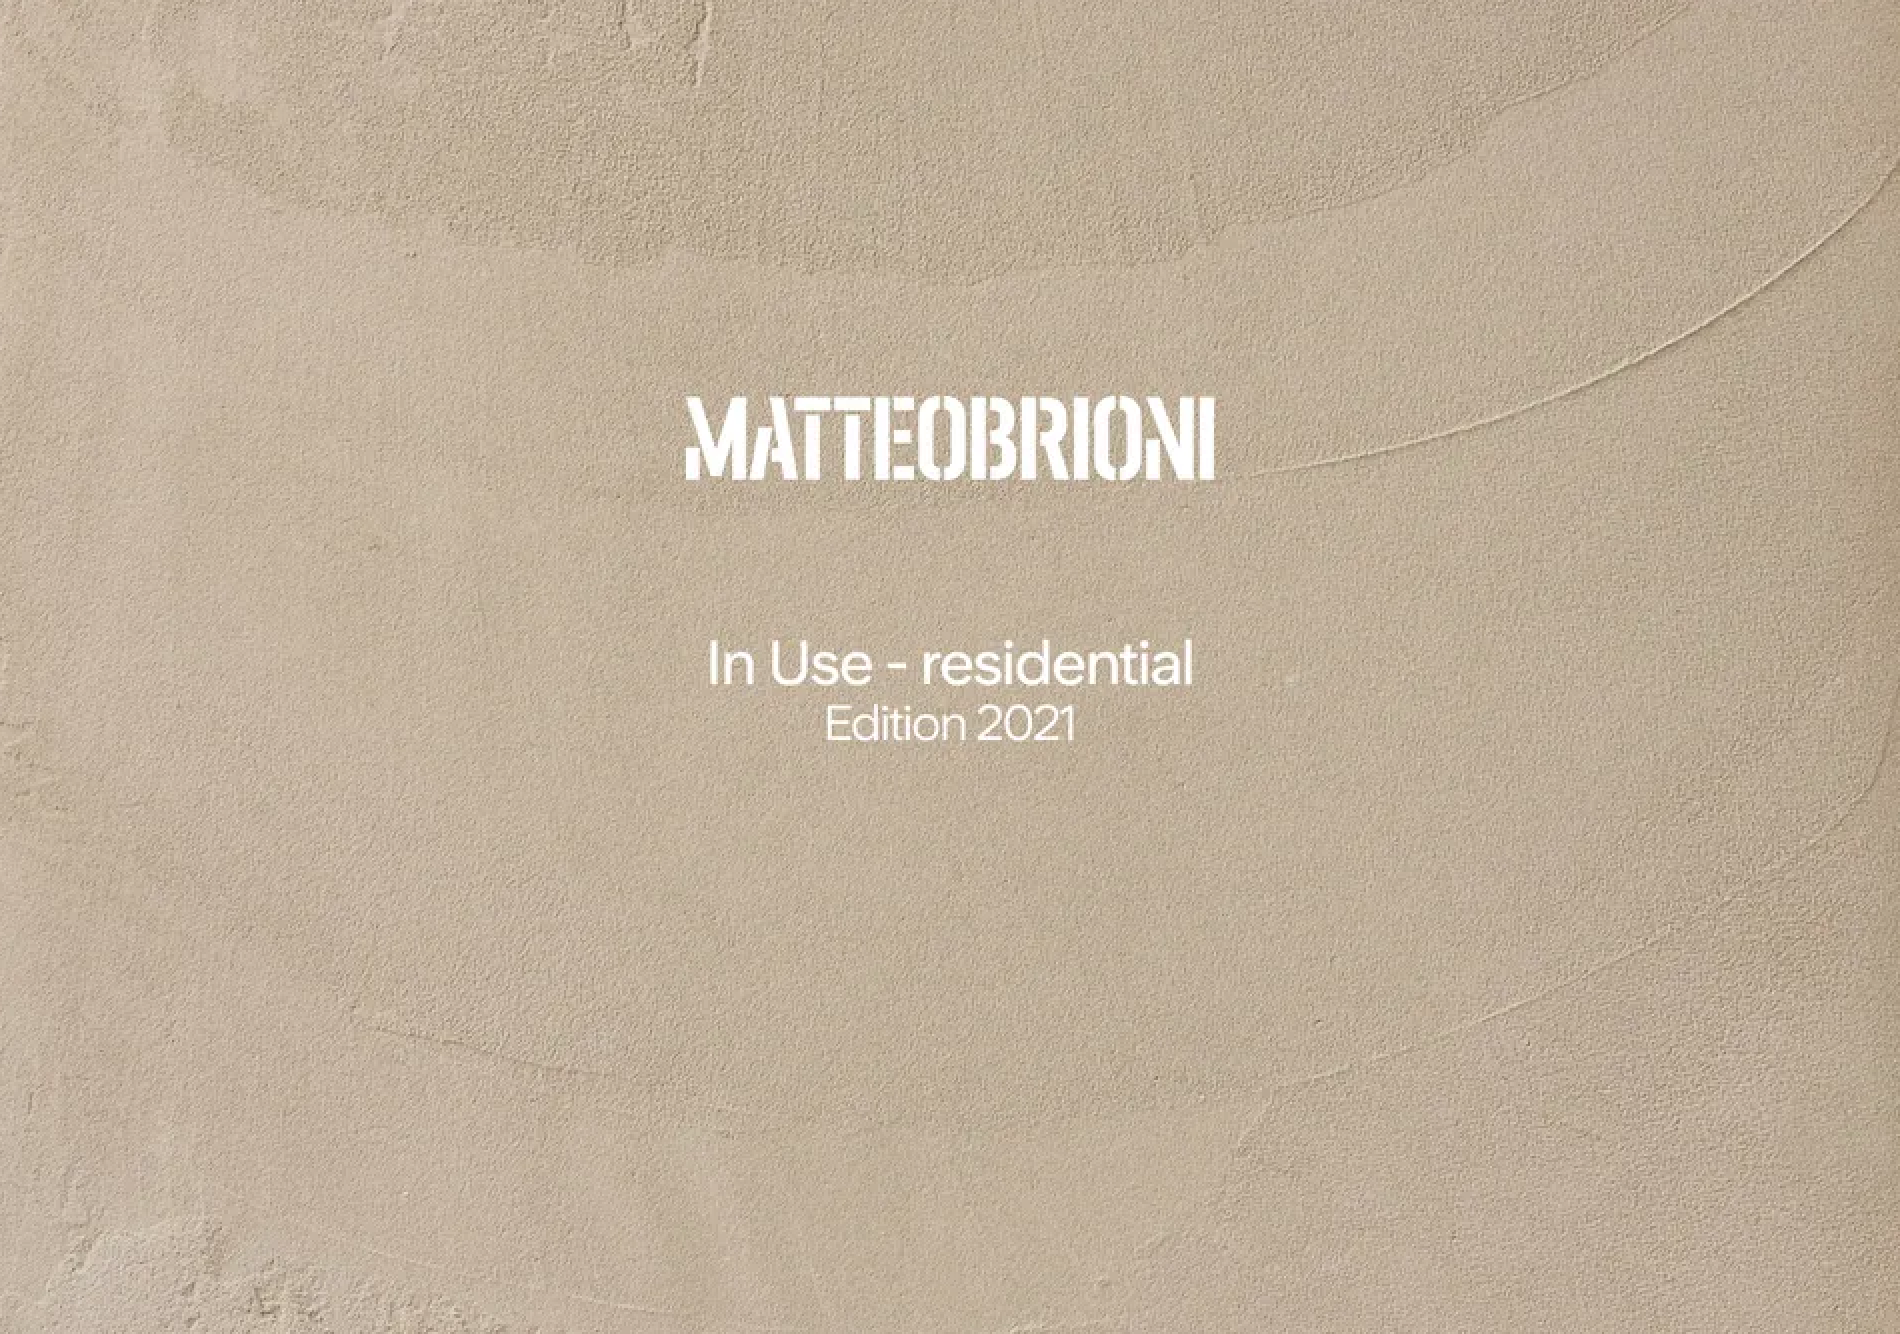 Matteo Brioni - In Use showrooms